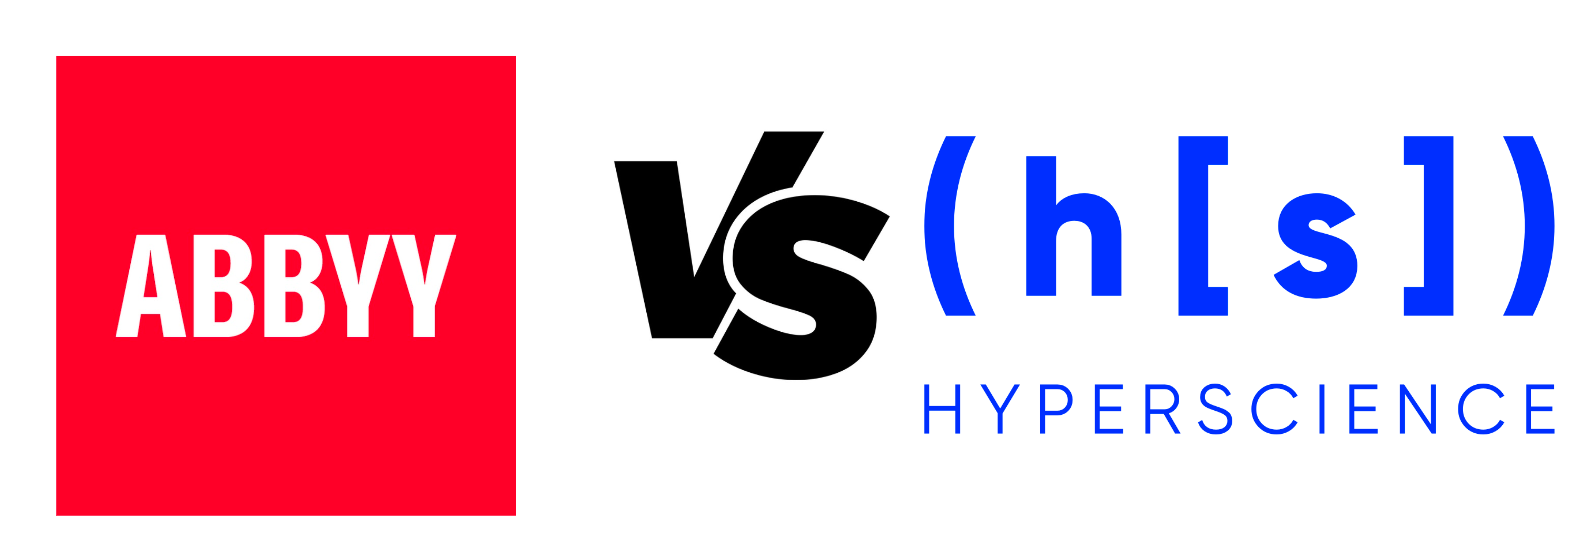 ABBYY vs Hyperscience